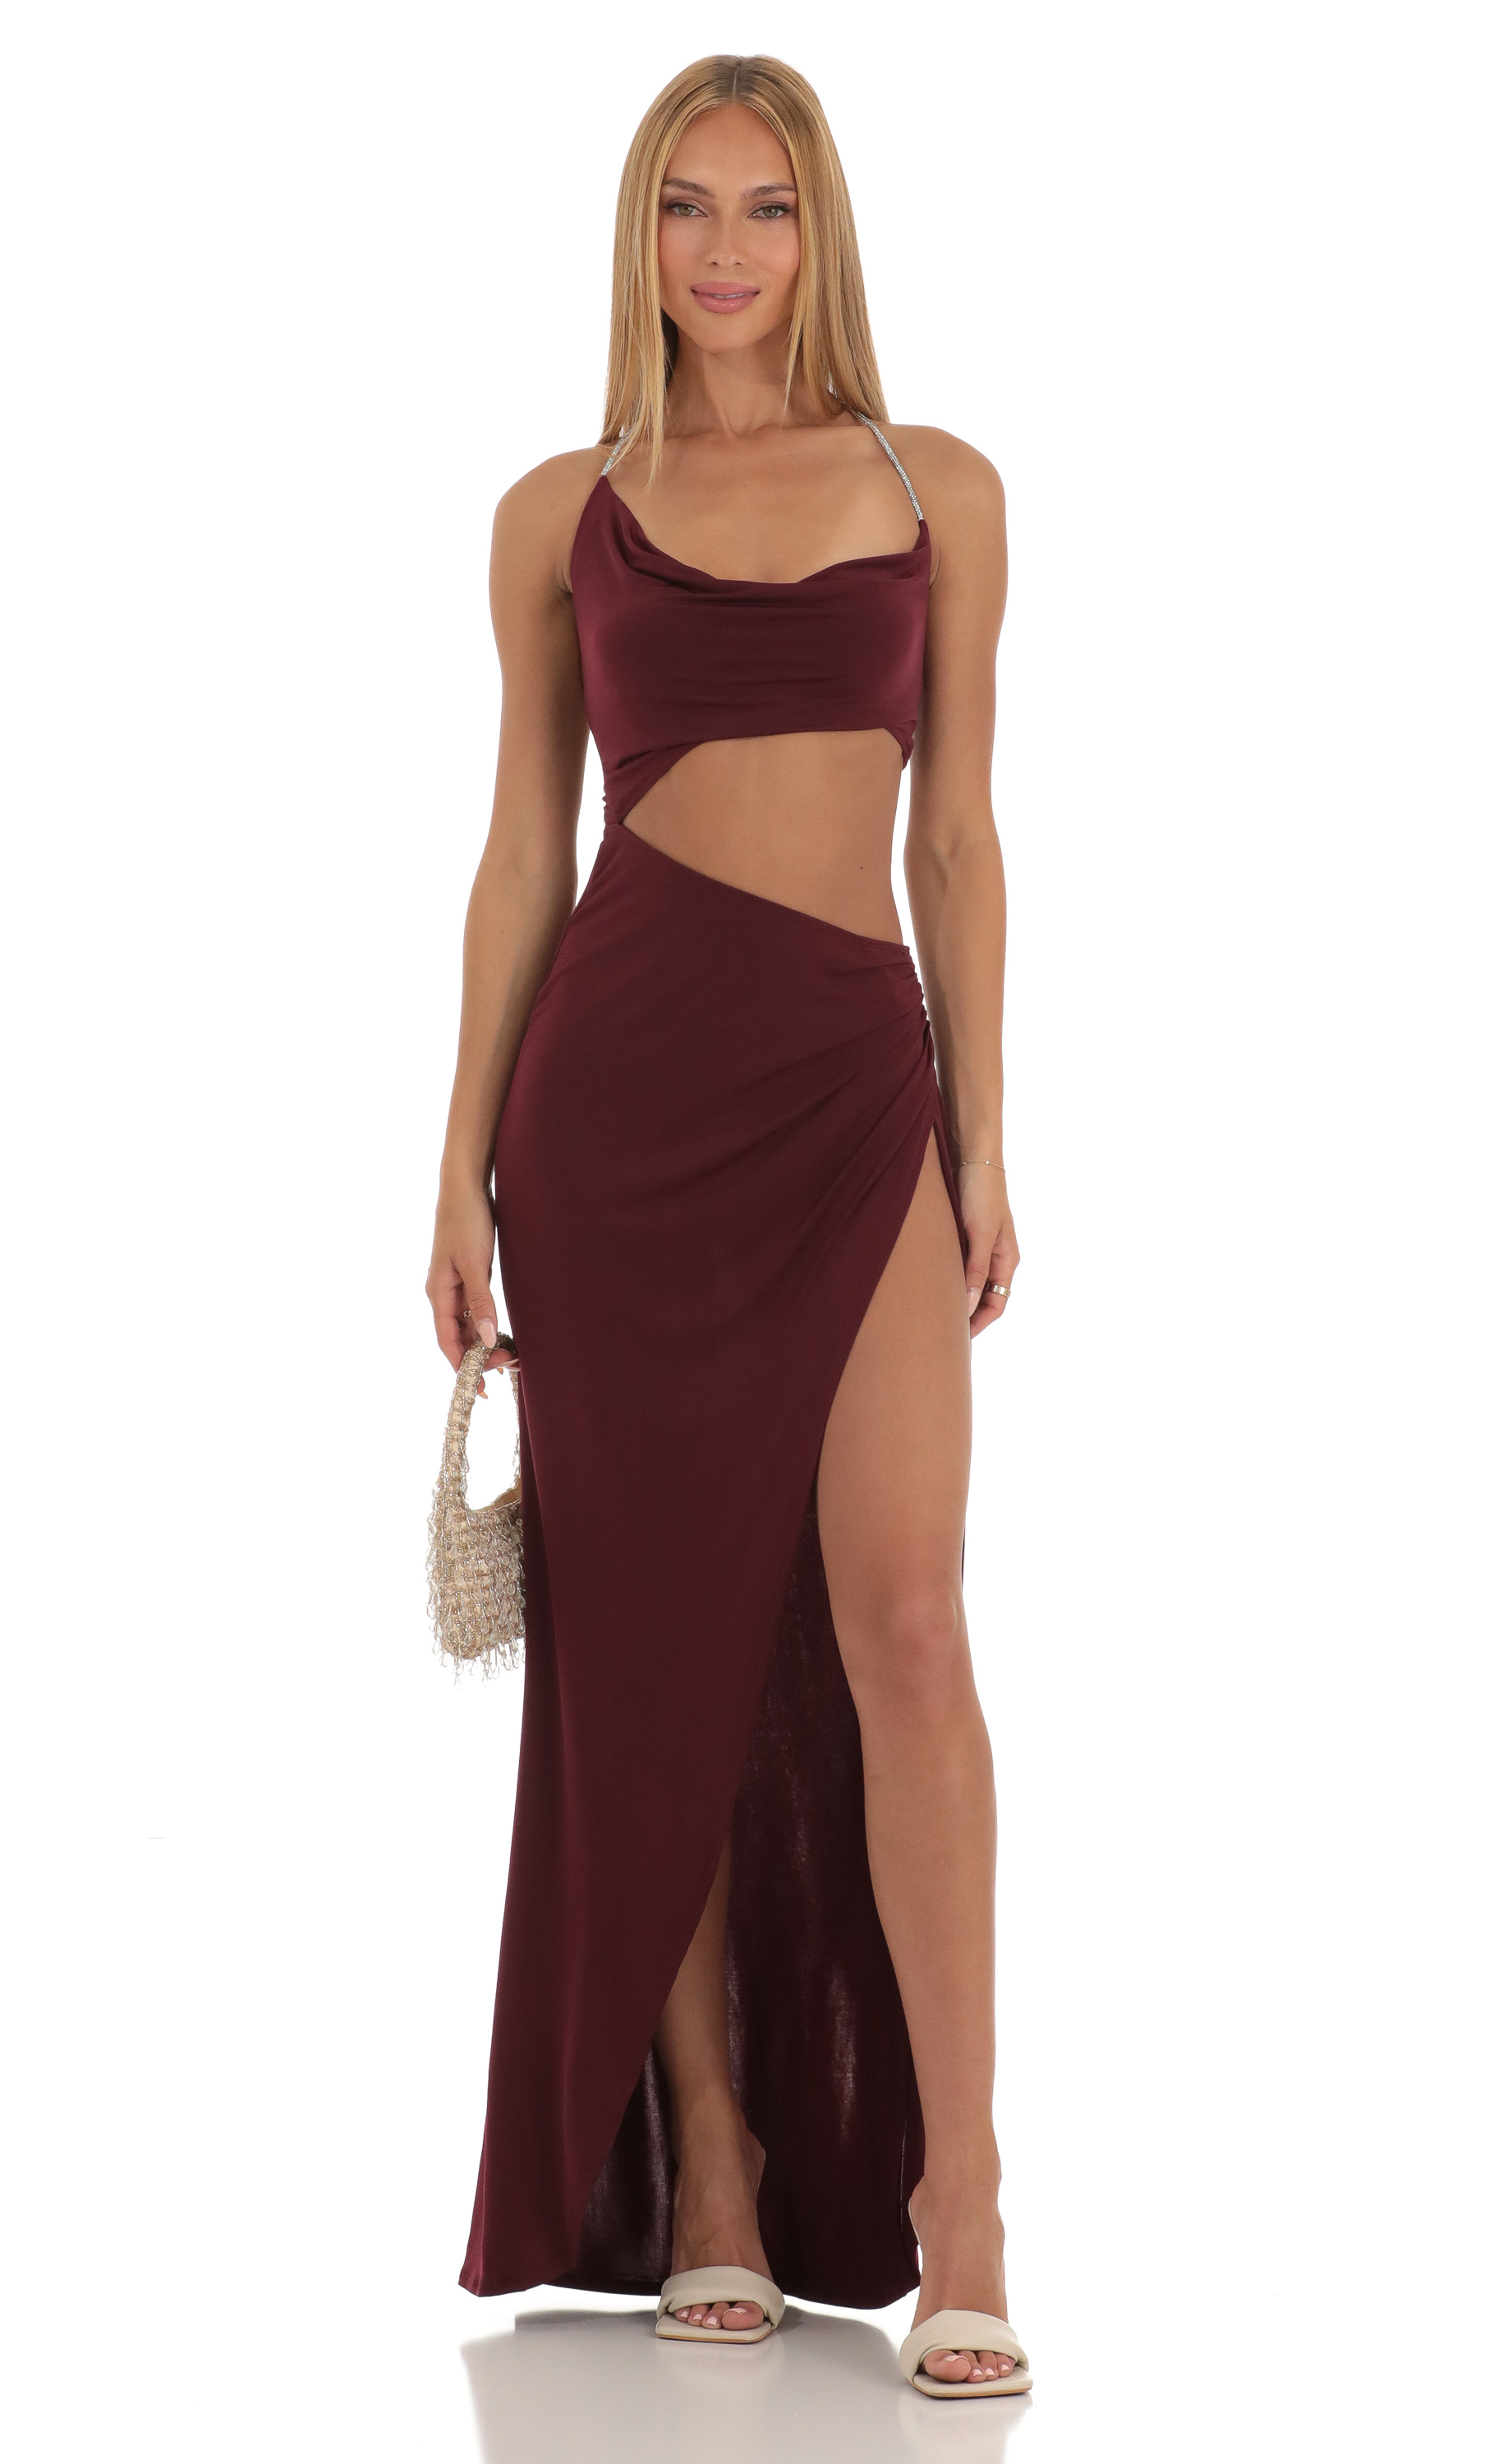 Athens Rhinestone Cutout Maxi Dress in Wine